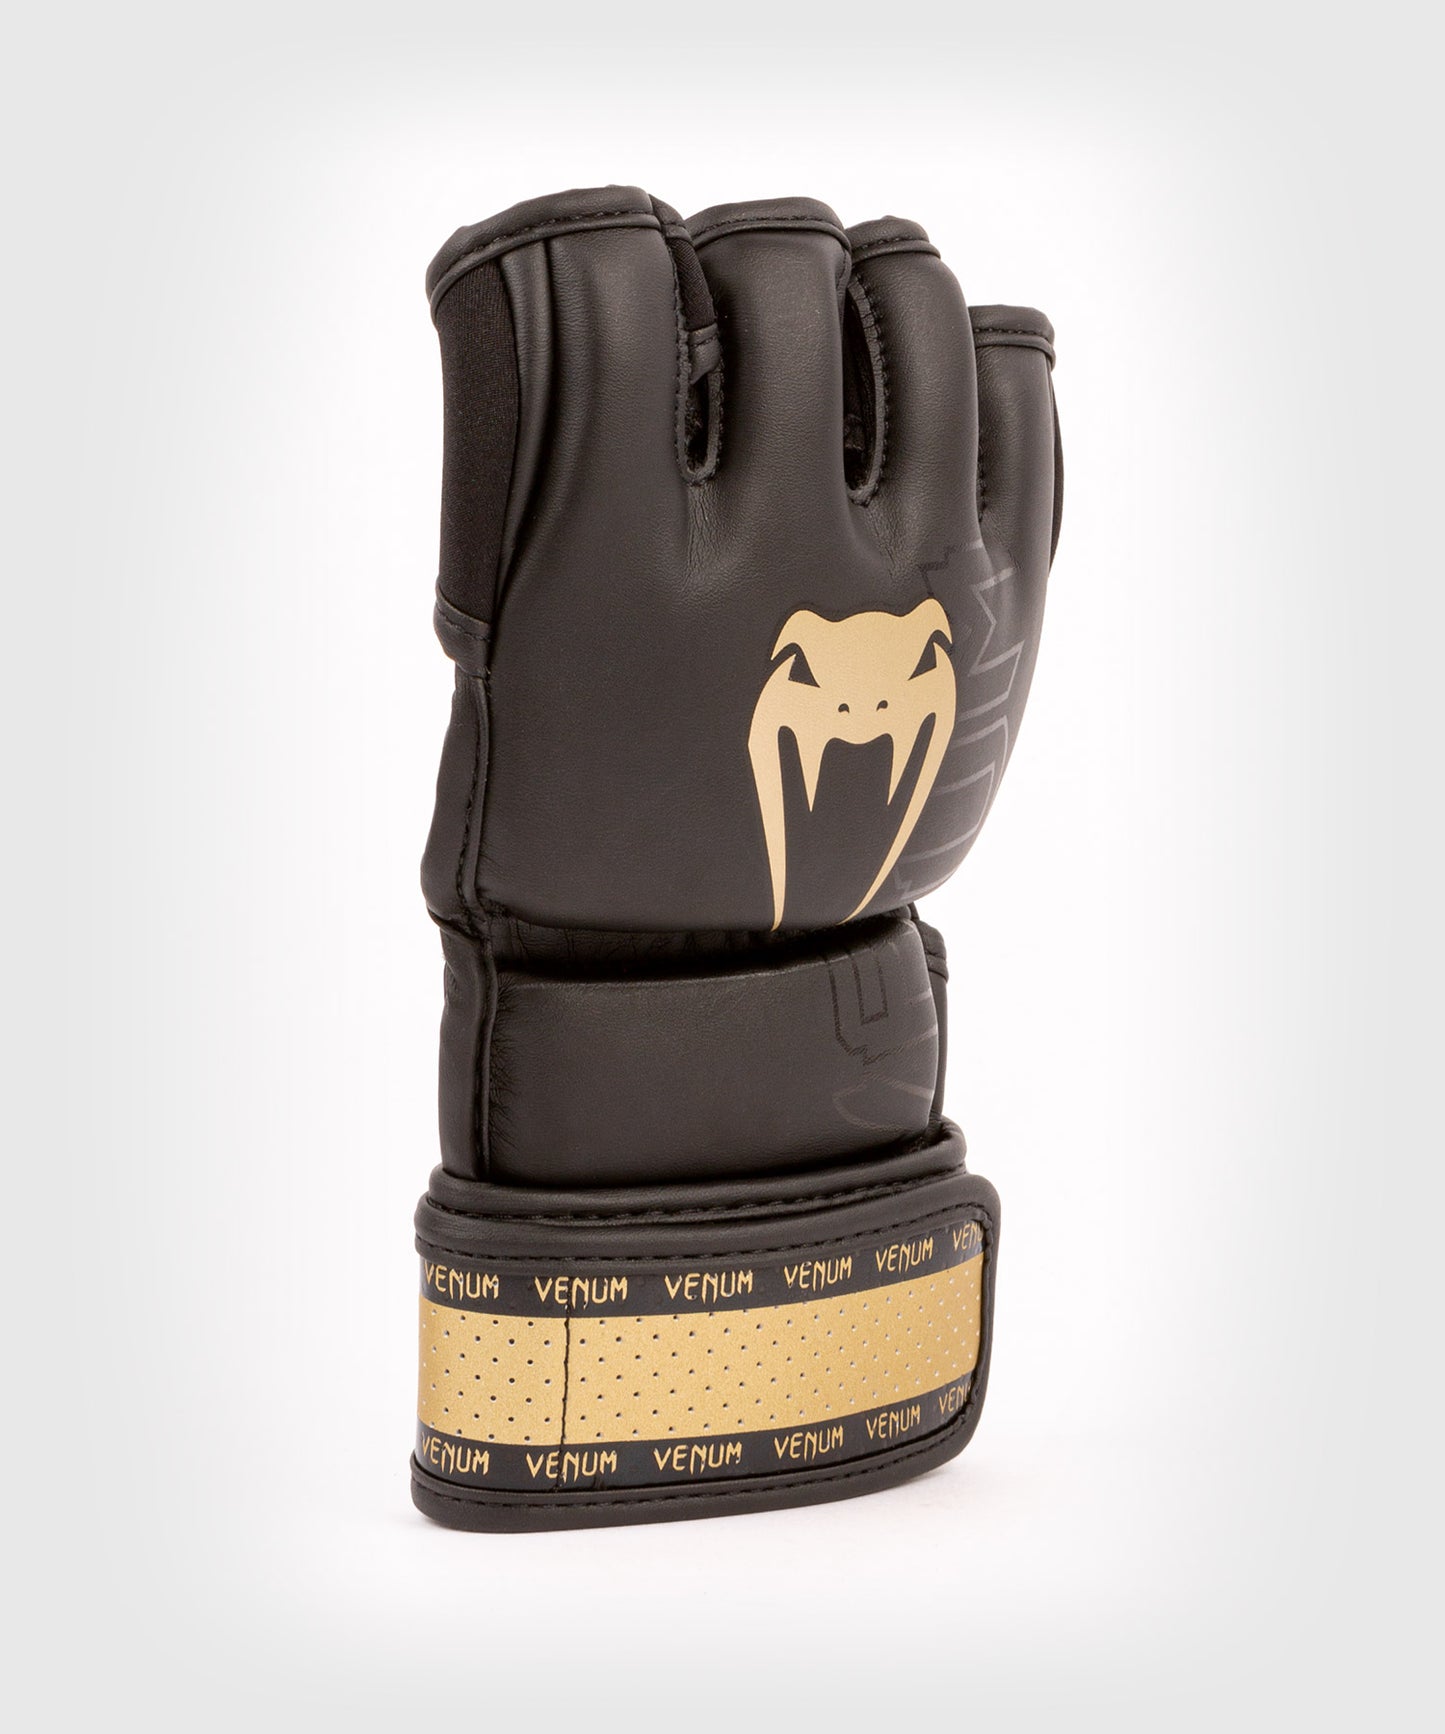 Venum Impact 2.0 MMA Gloves - Black/Gold